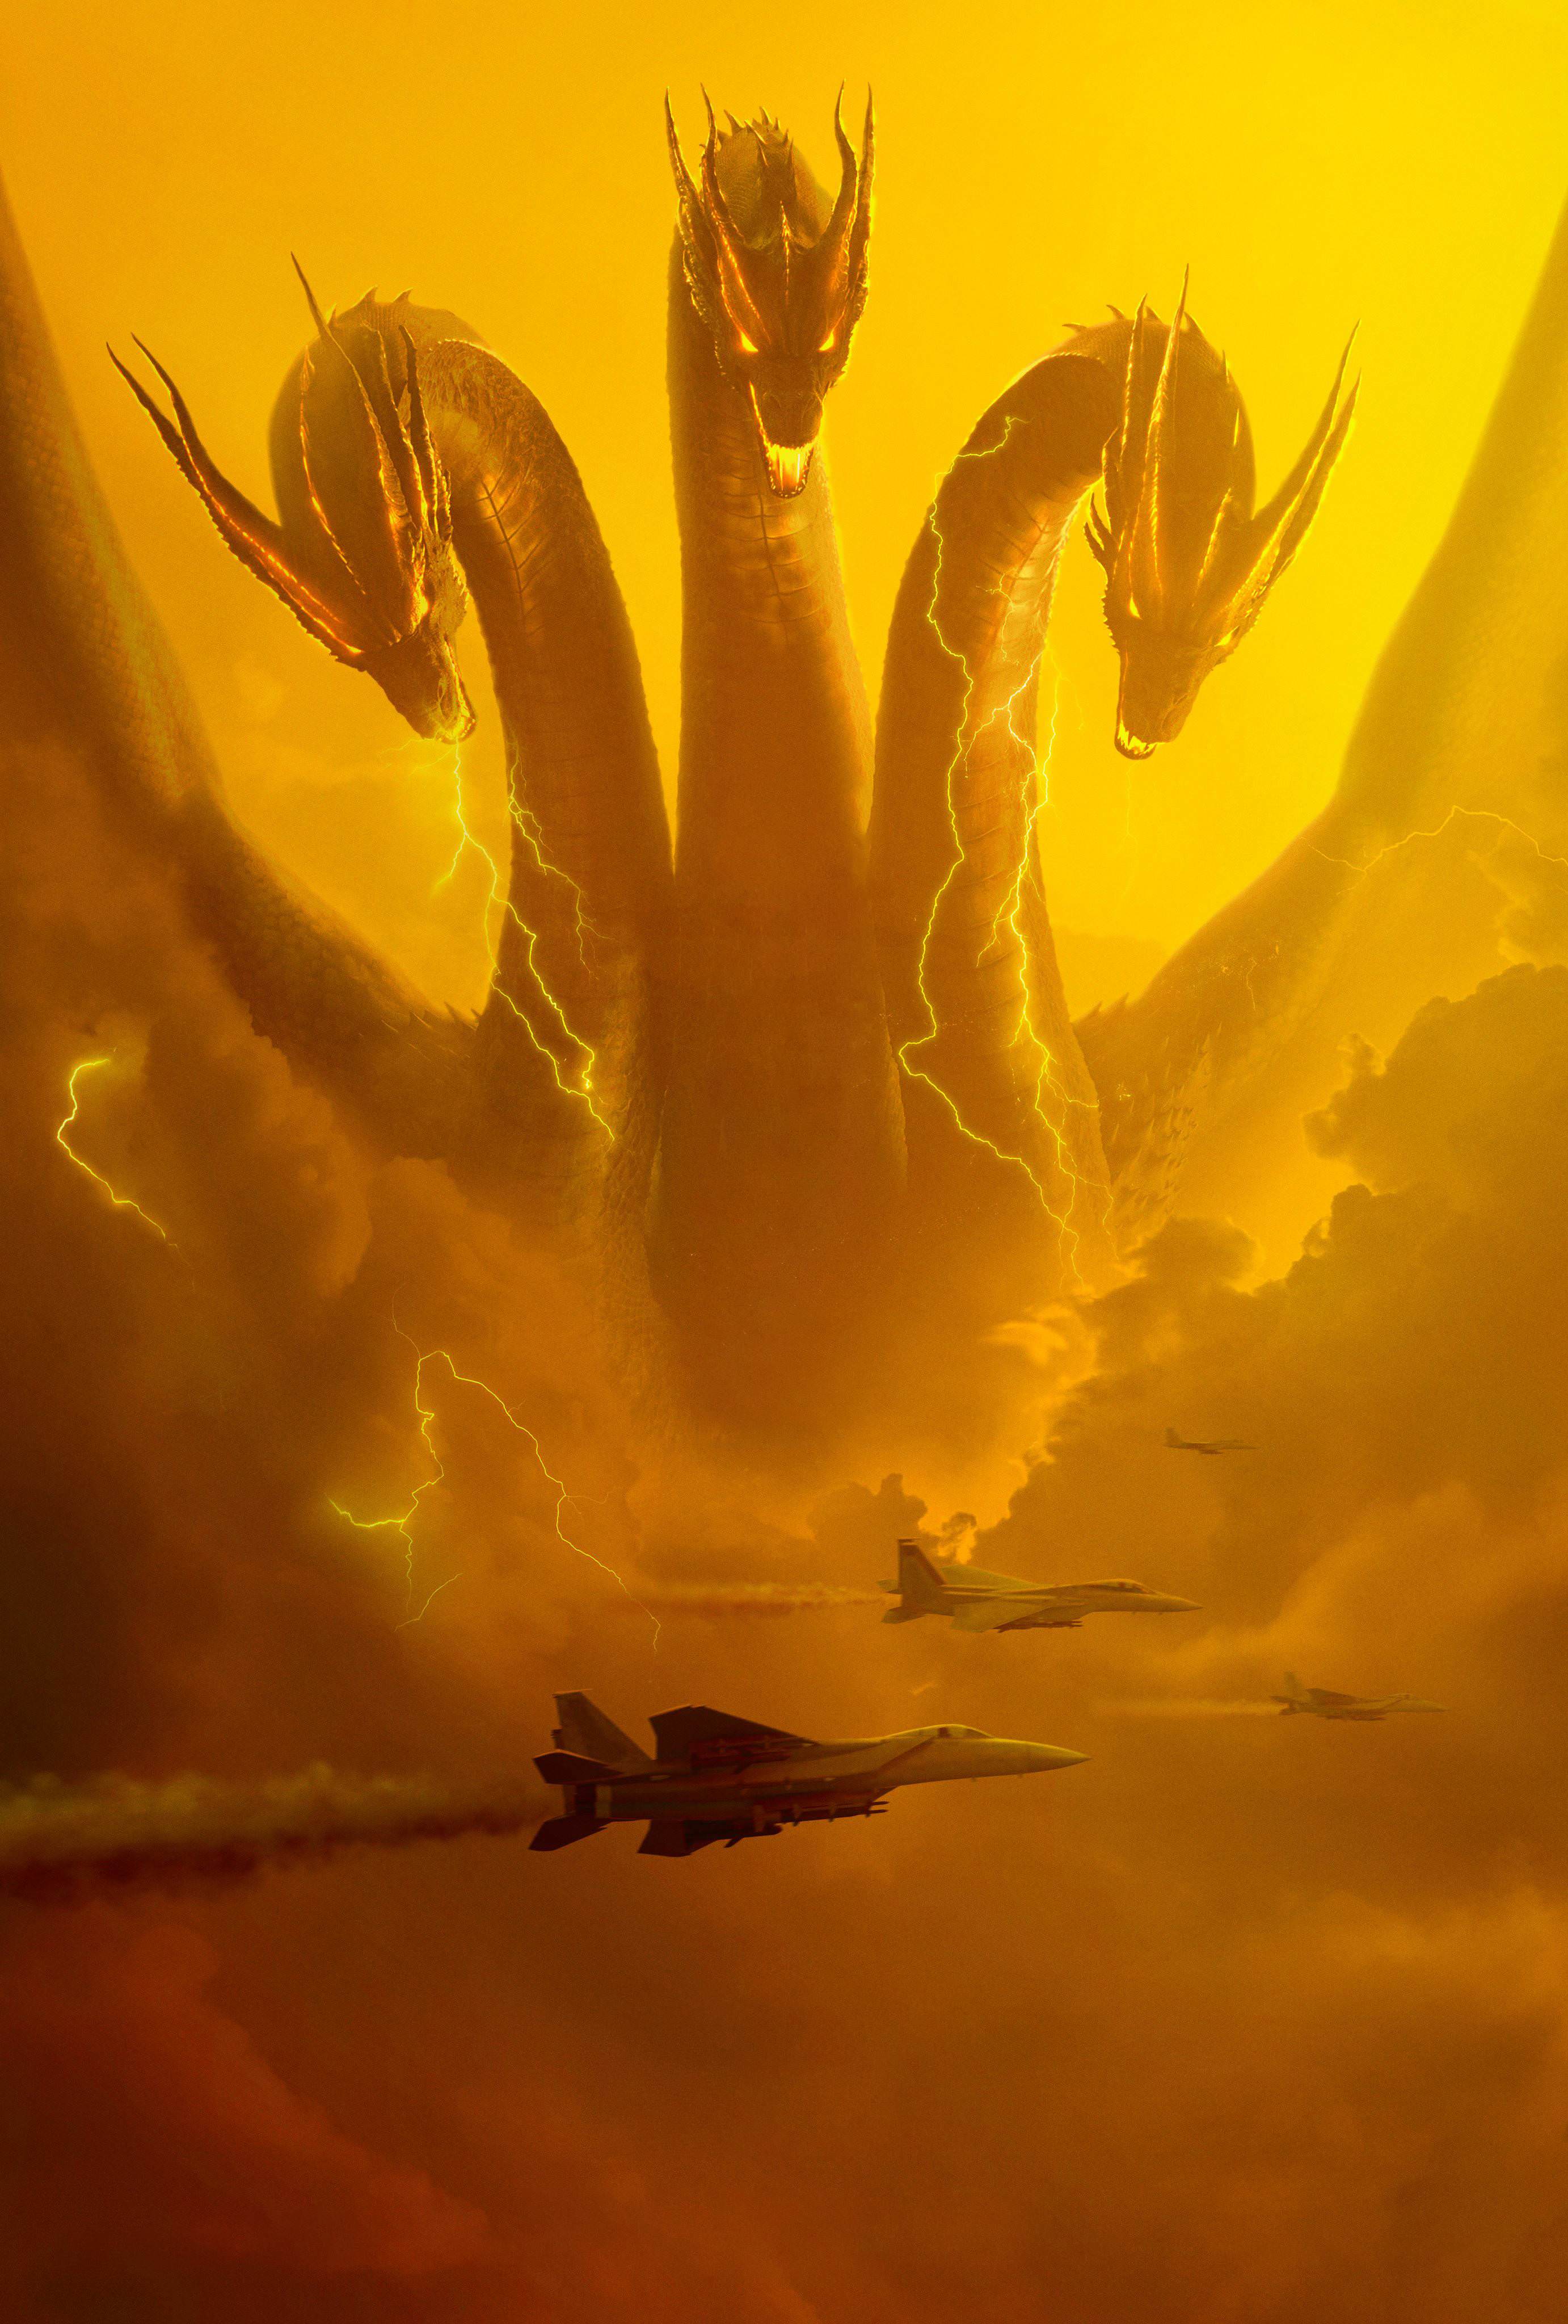 Godzilla (2019/Monsterverse) vs SCP-3000